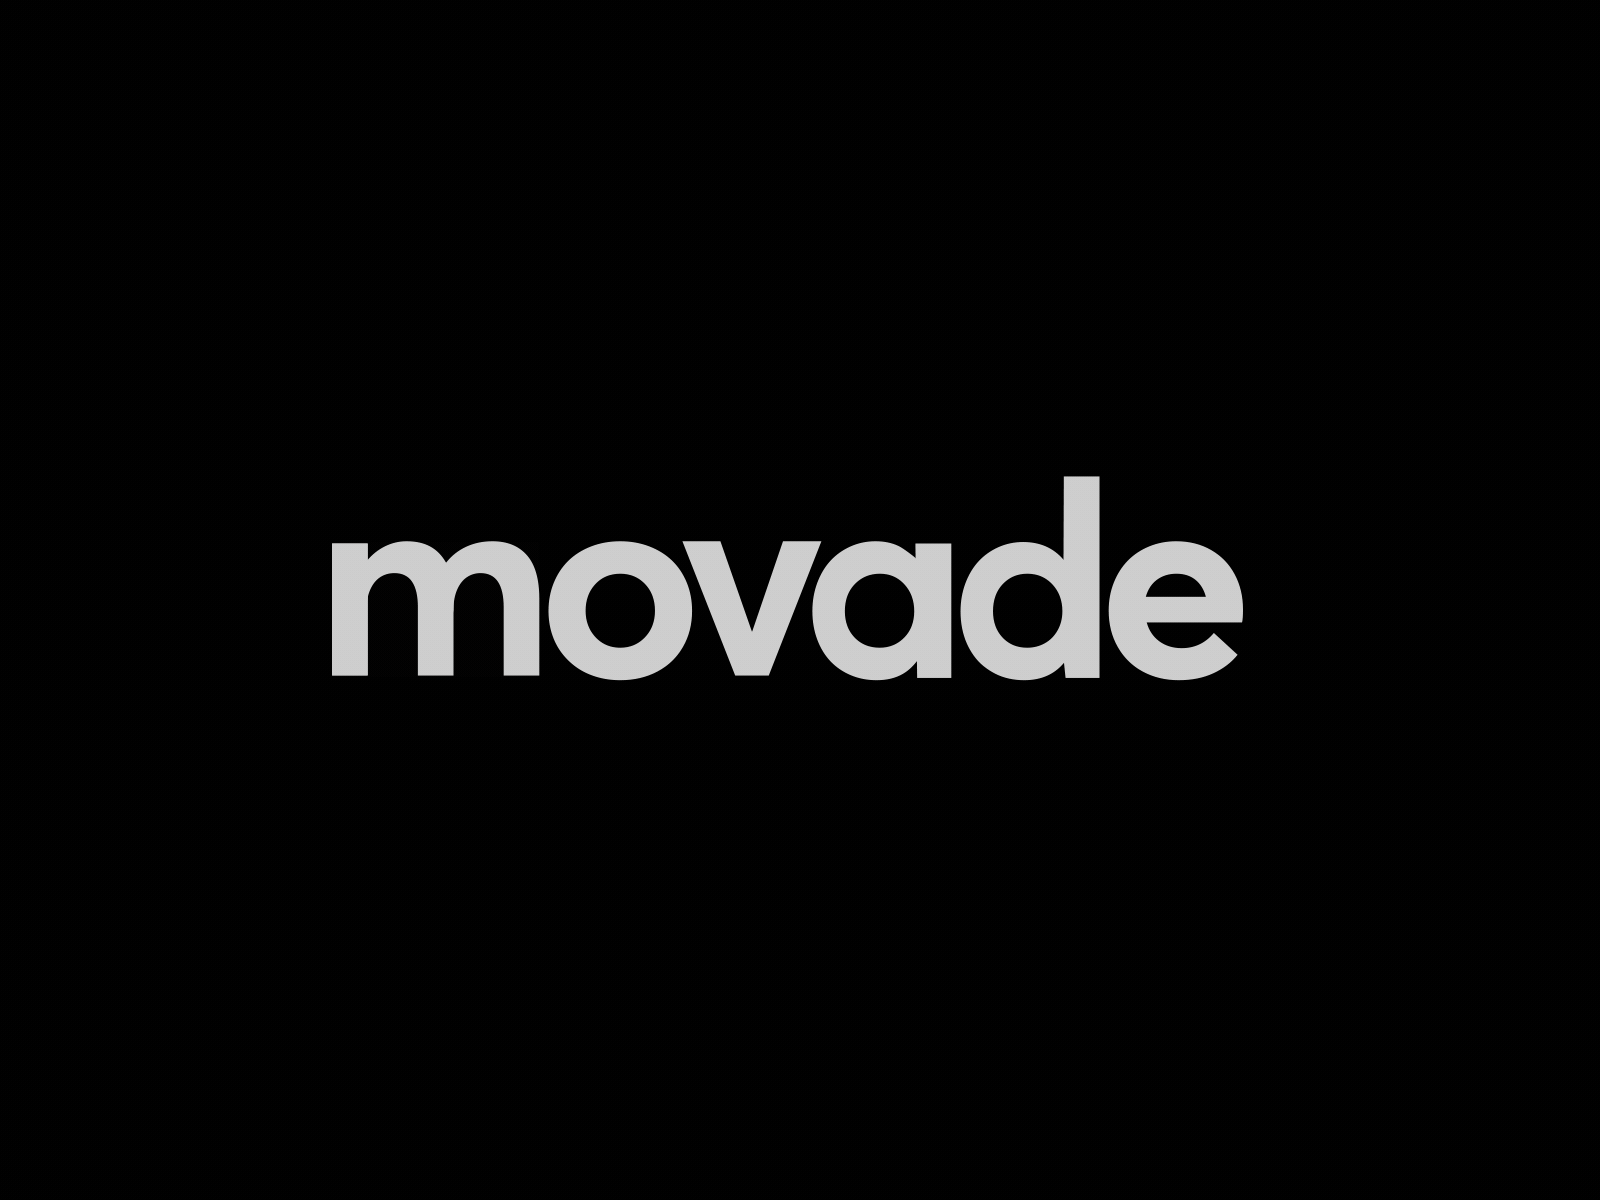 Logo Animation - Movade (black)